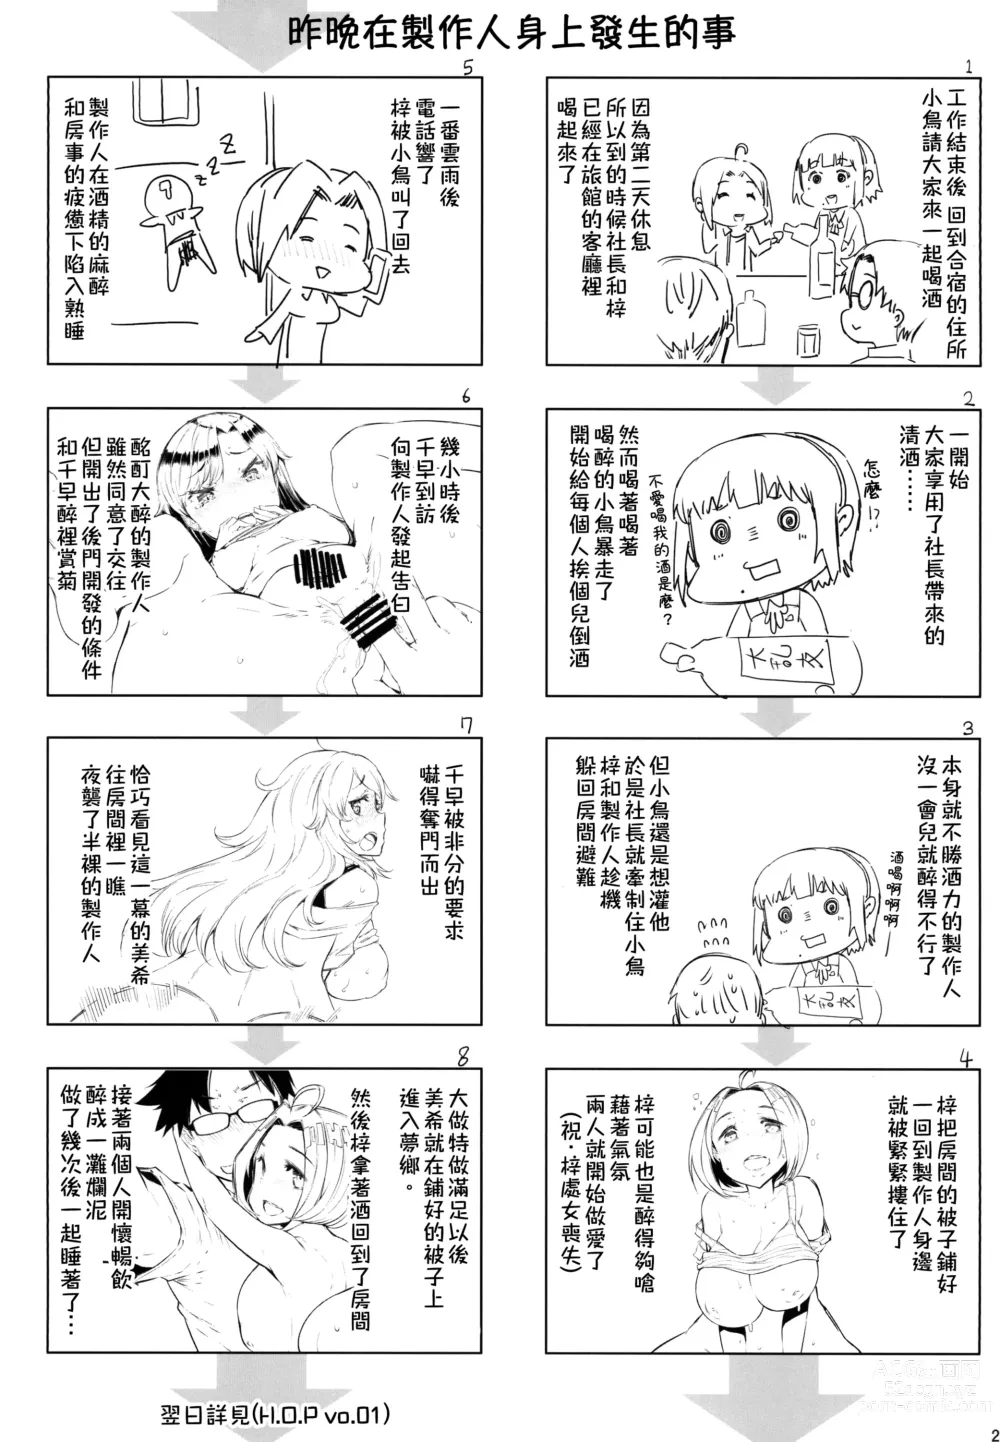 Page 23 of doujinshi HOP vol. 03 Final Episode